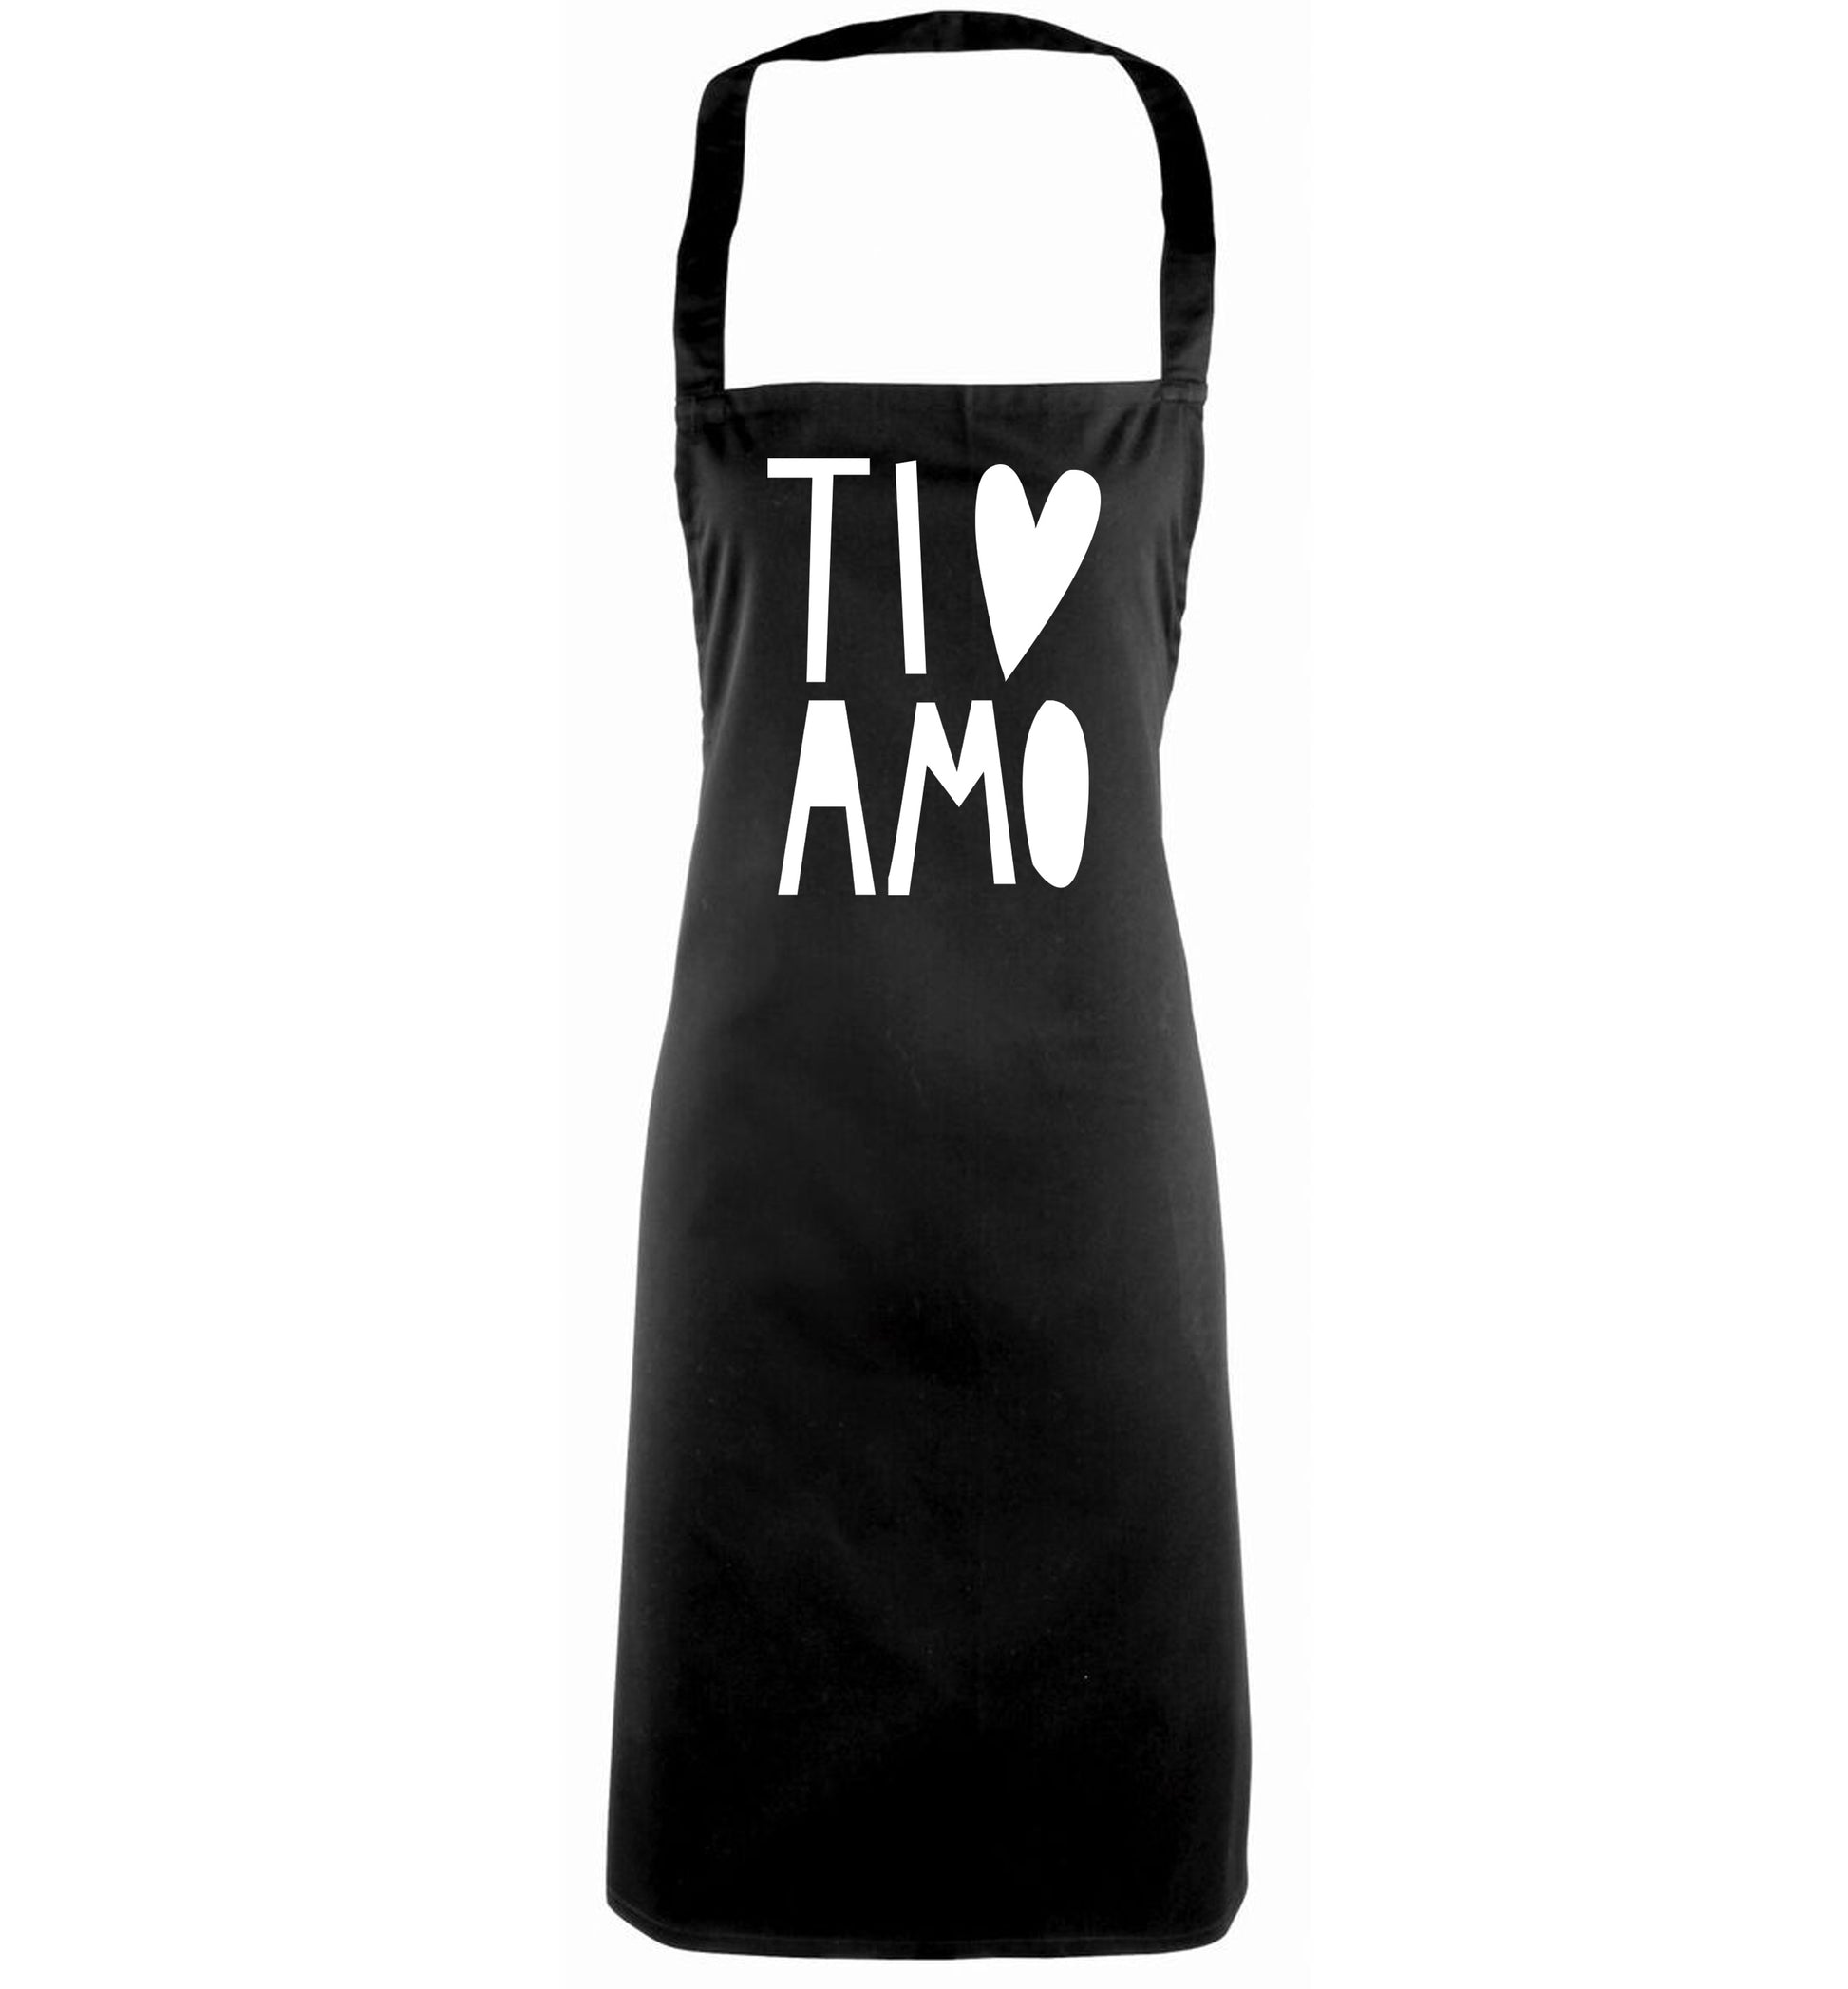 Ti amo - I love you black apron